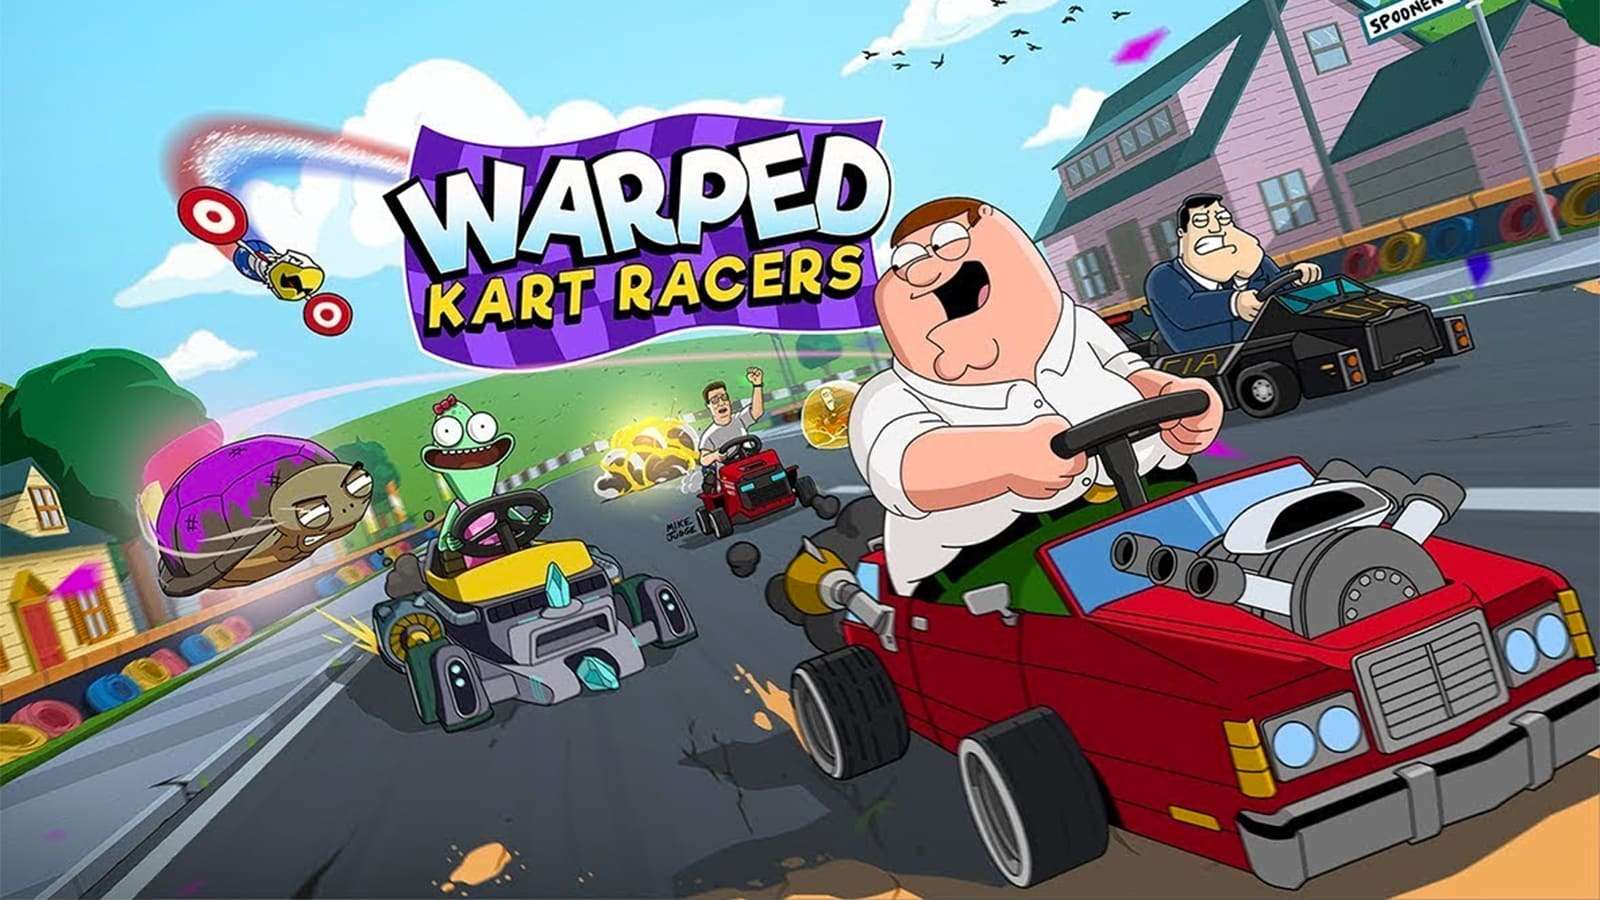 A poster for Warped Kart Racers